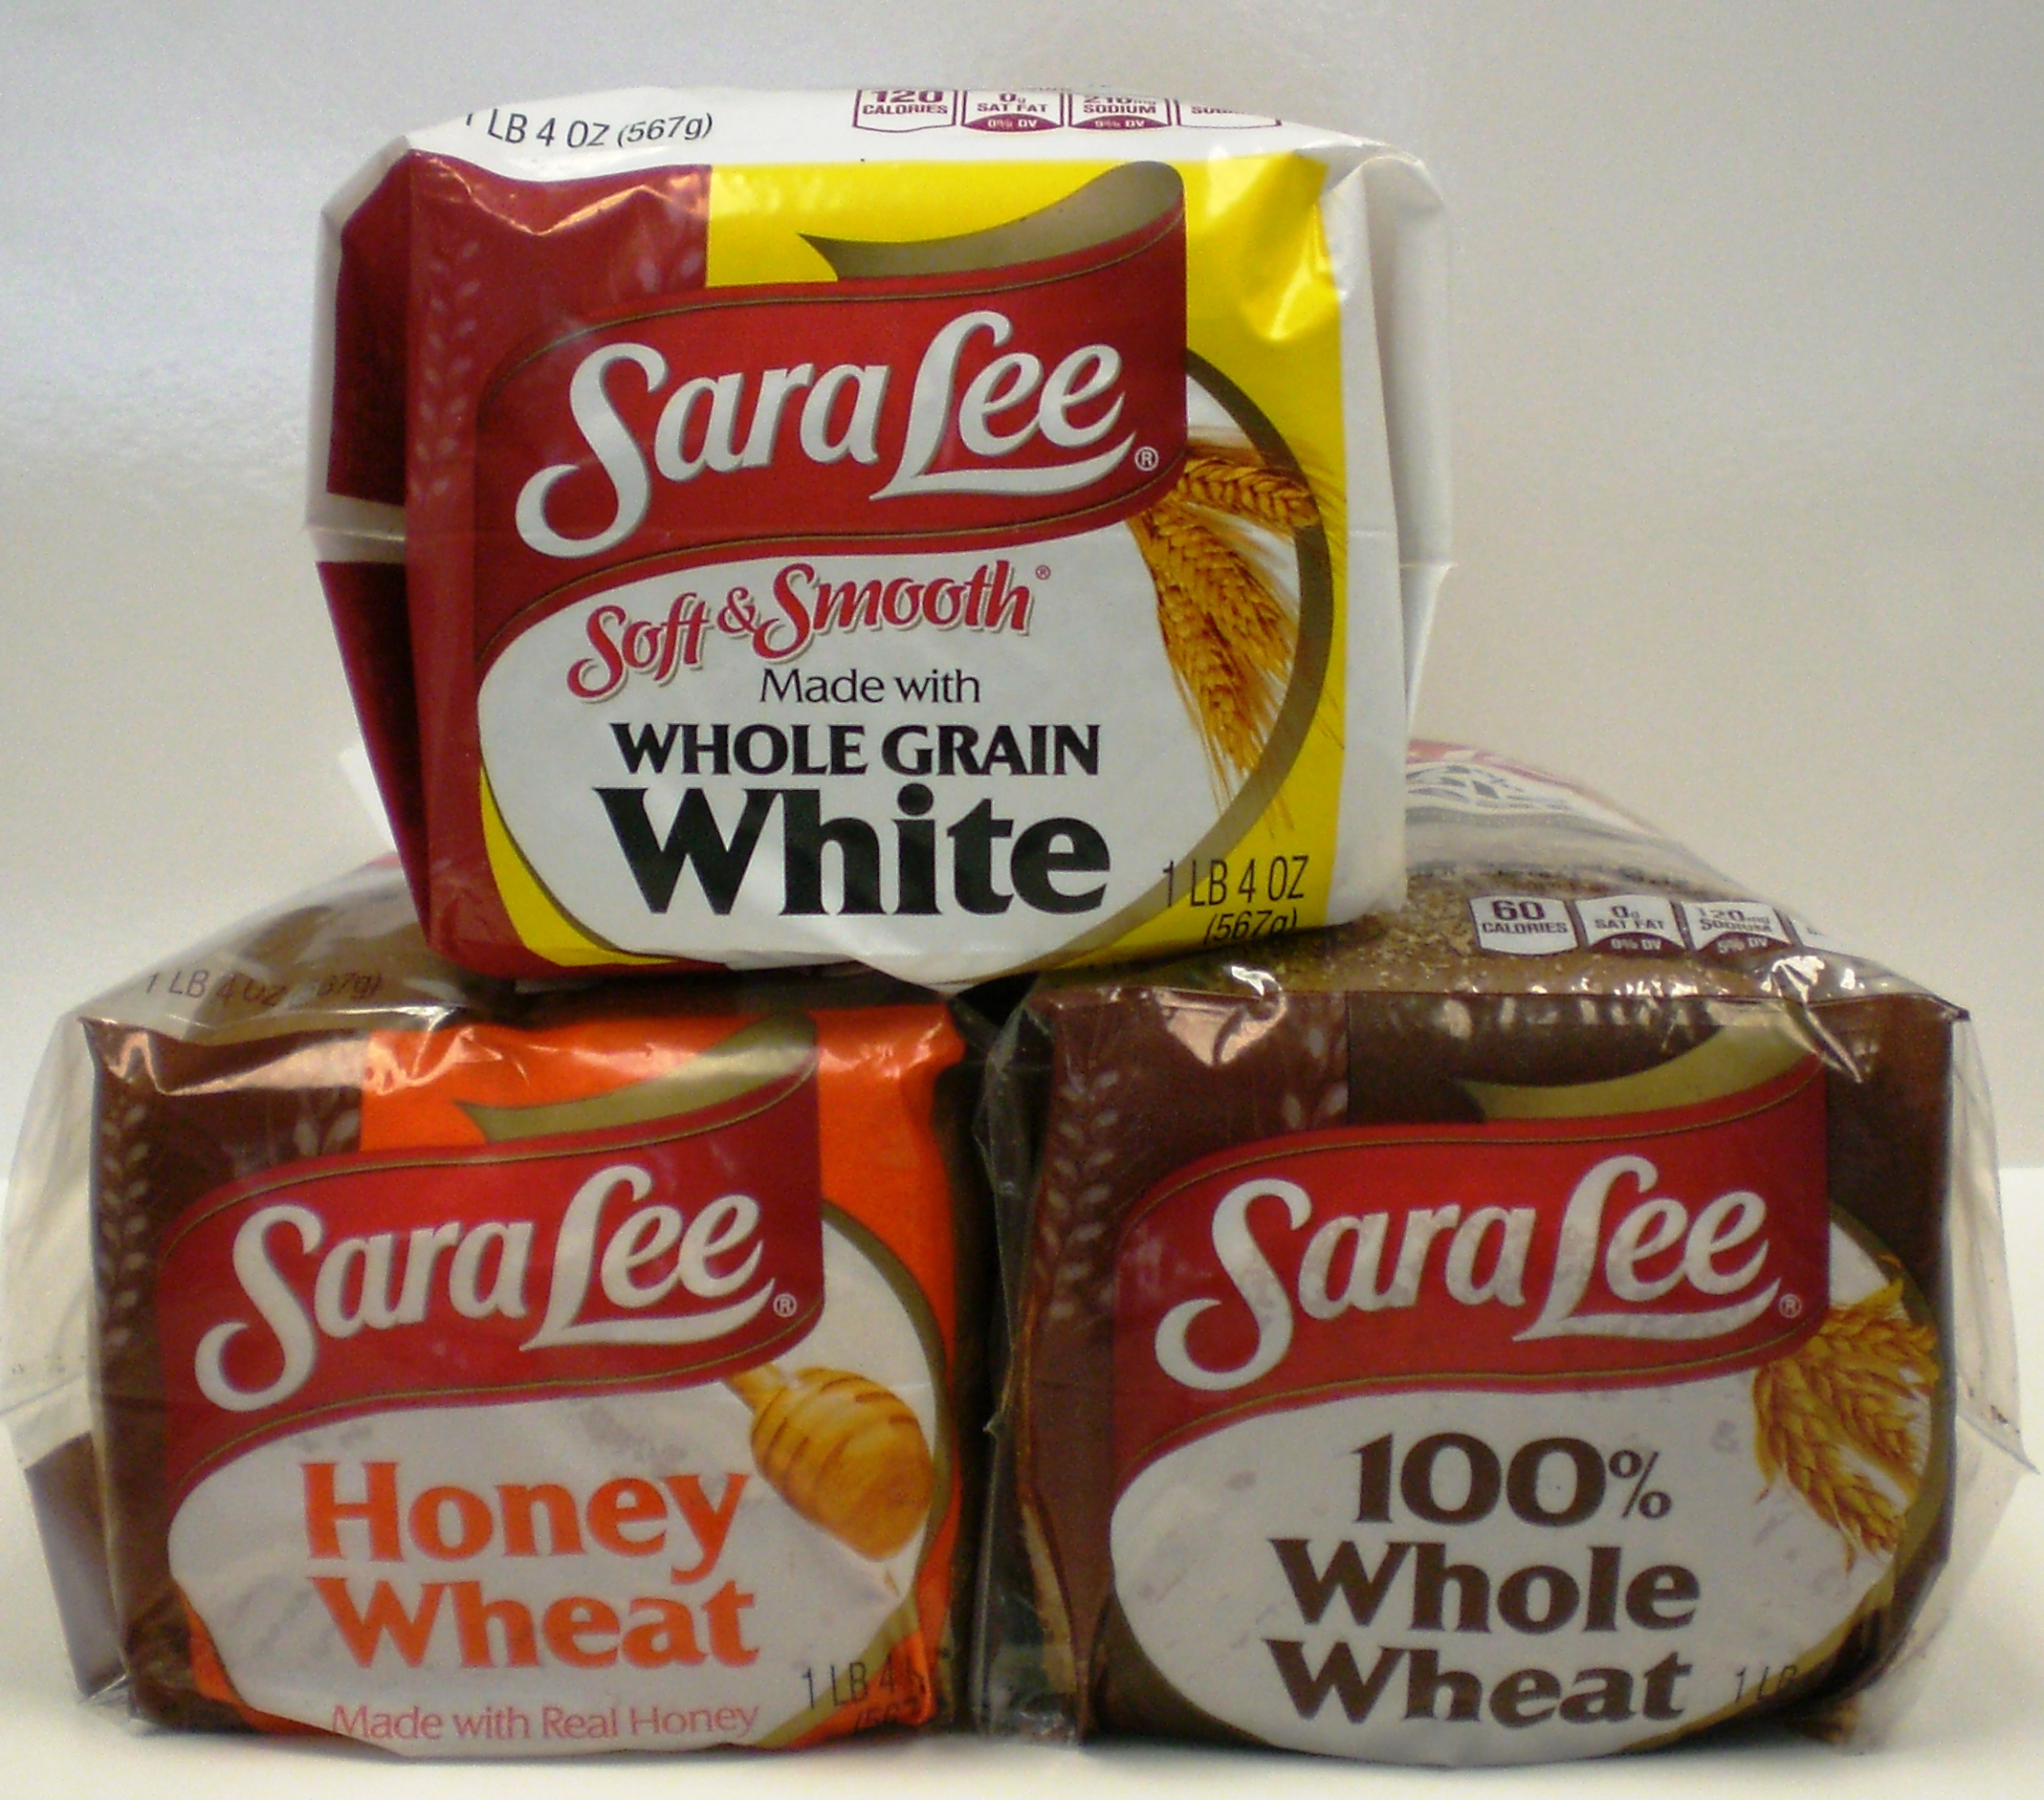 https://www.bakeryandsnacks.com/var/wrbm_gb_food_pharma/storage/images/3/8/4/8/2478483-1-eng-GB/New-Sara-Lee-Breads-owner-Bimbo-expands-US-distribution.jpg